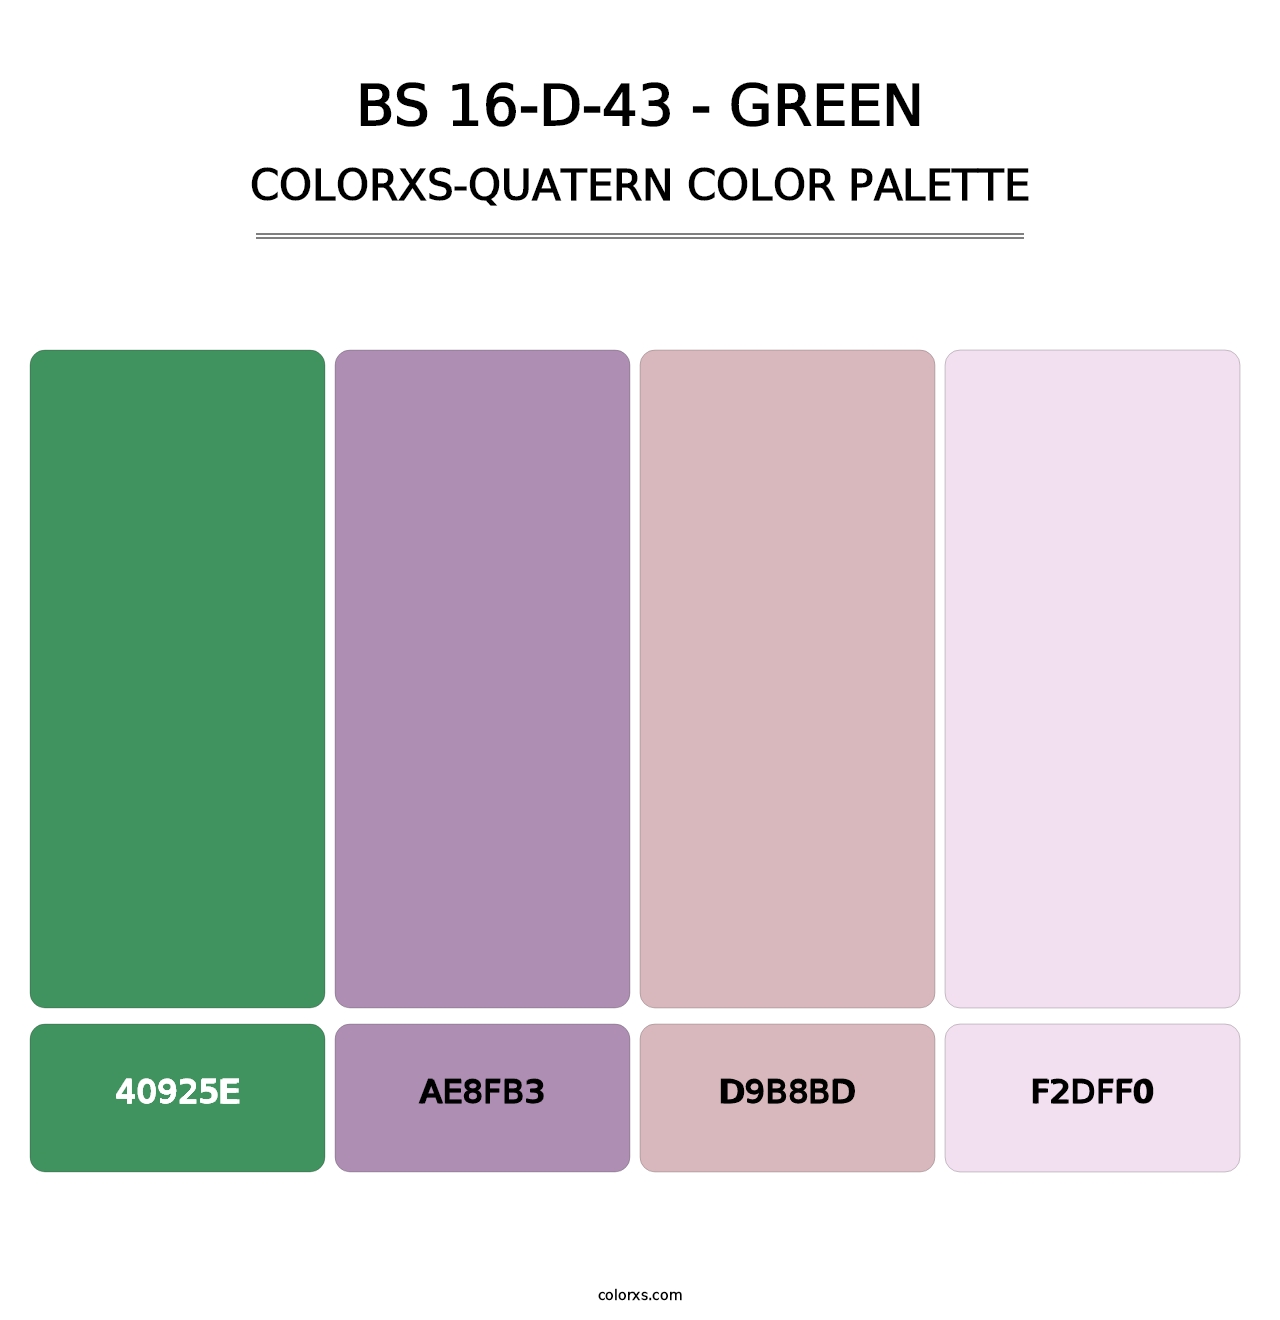 BS 16-D-43 - Green - Colorxs Quatern Palette